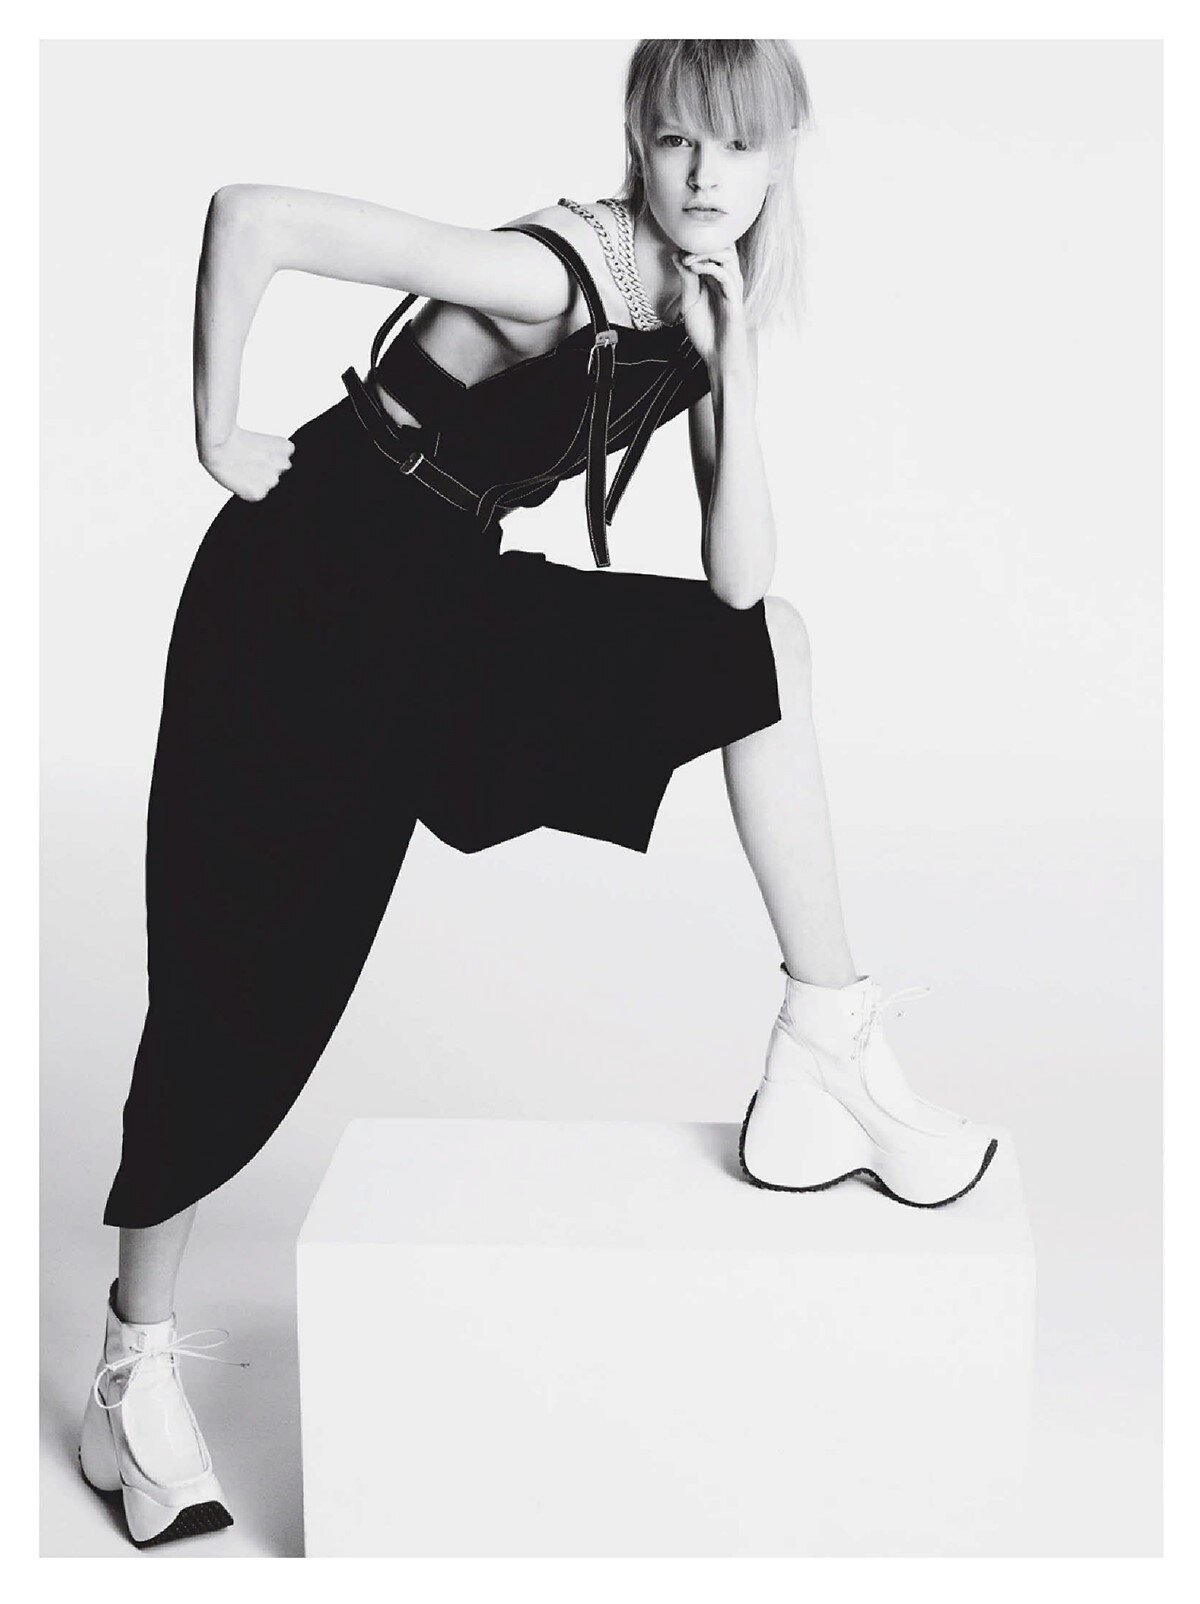 Luigi Iango Vogue Japan June 2020  Simply Beautiful  (5).jpg